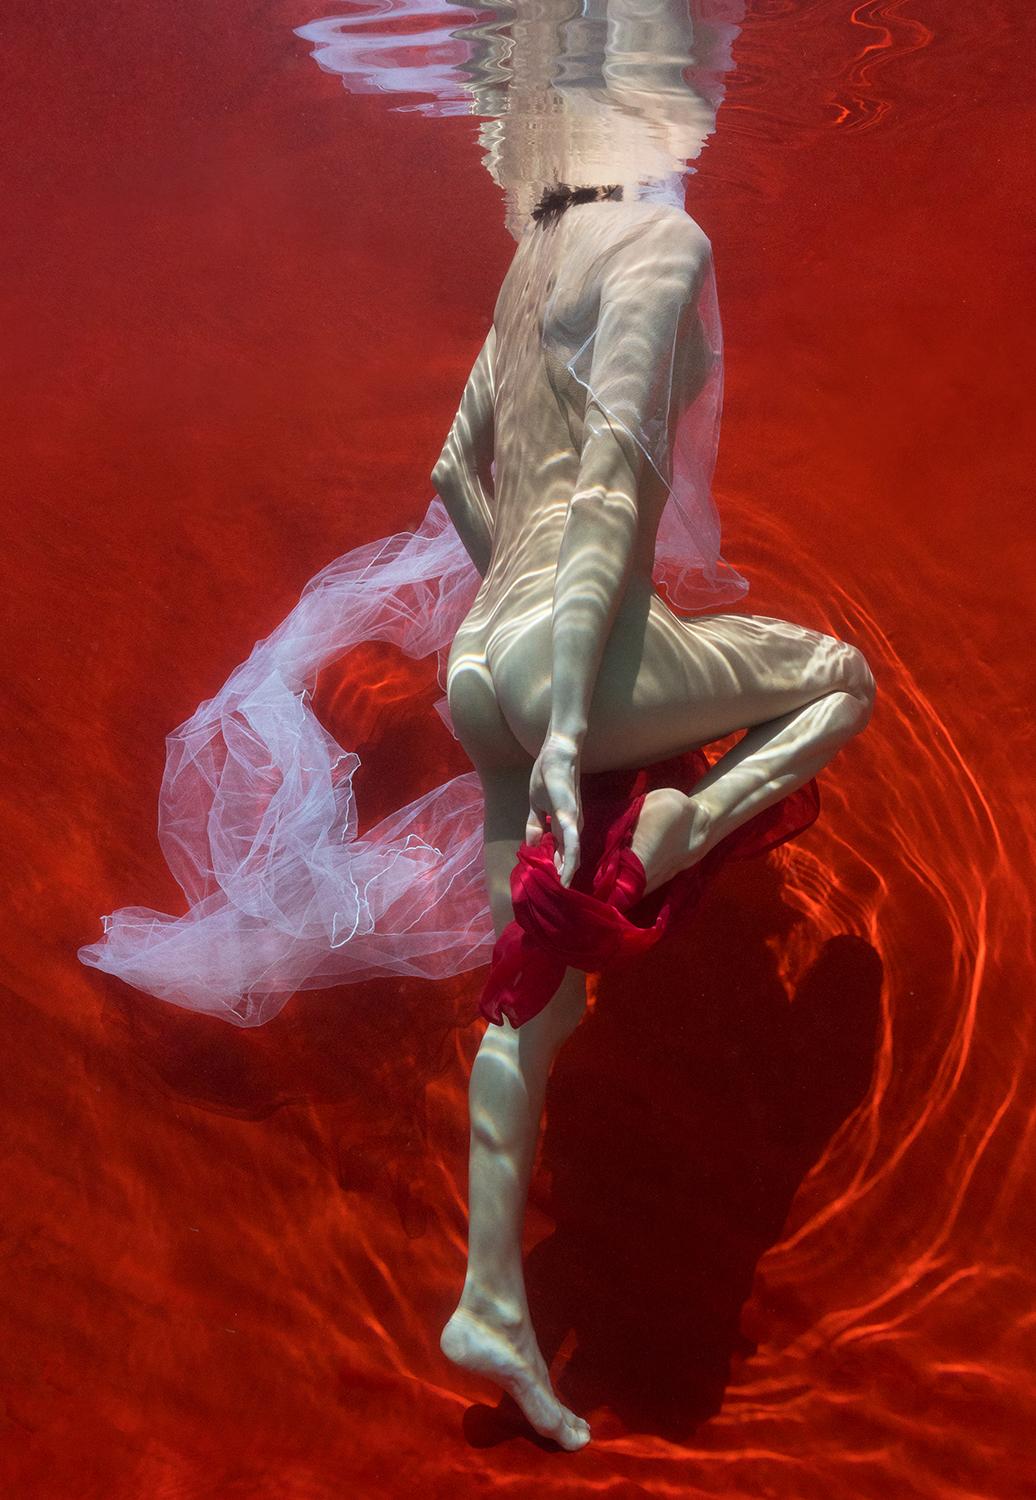 Blood and Milk VII  - underwater nude photograph - print on aluminum 36